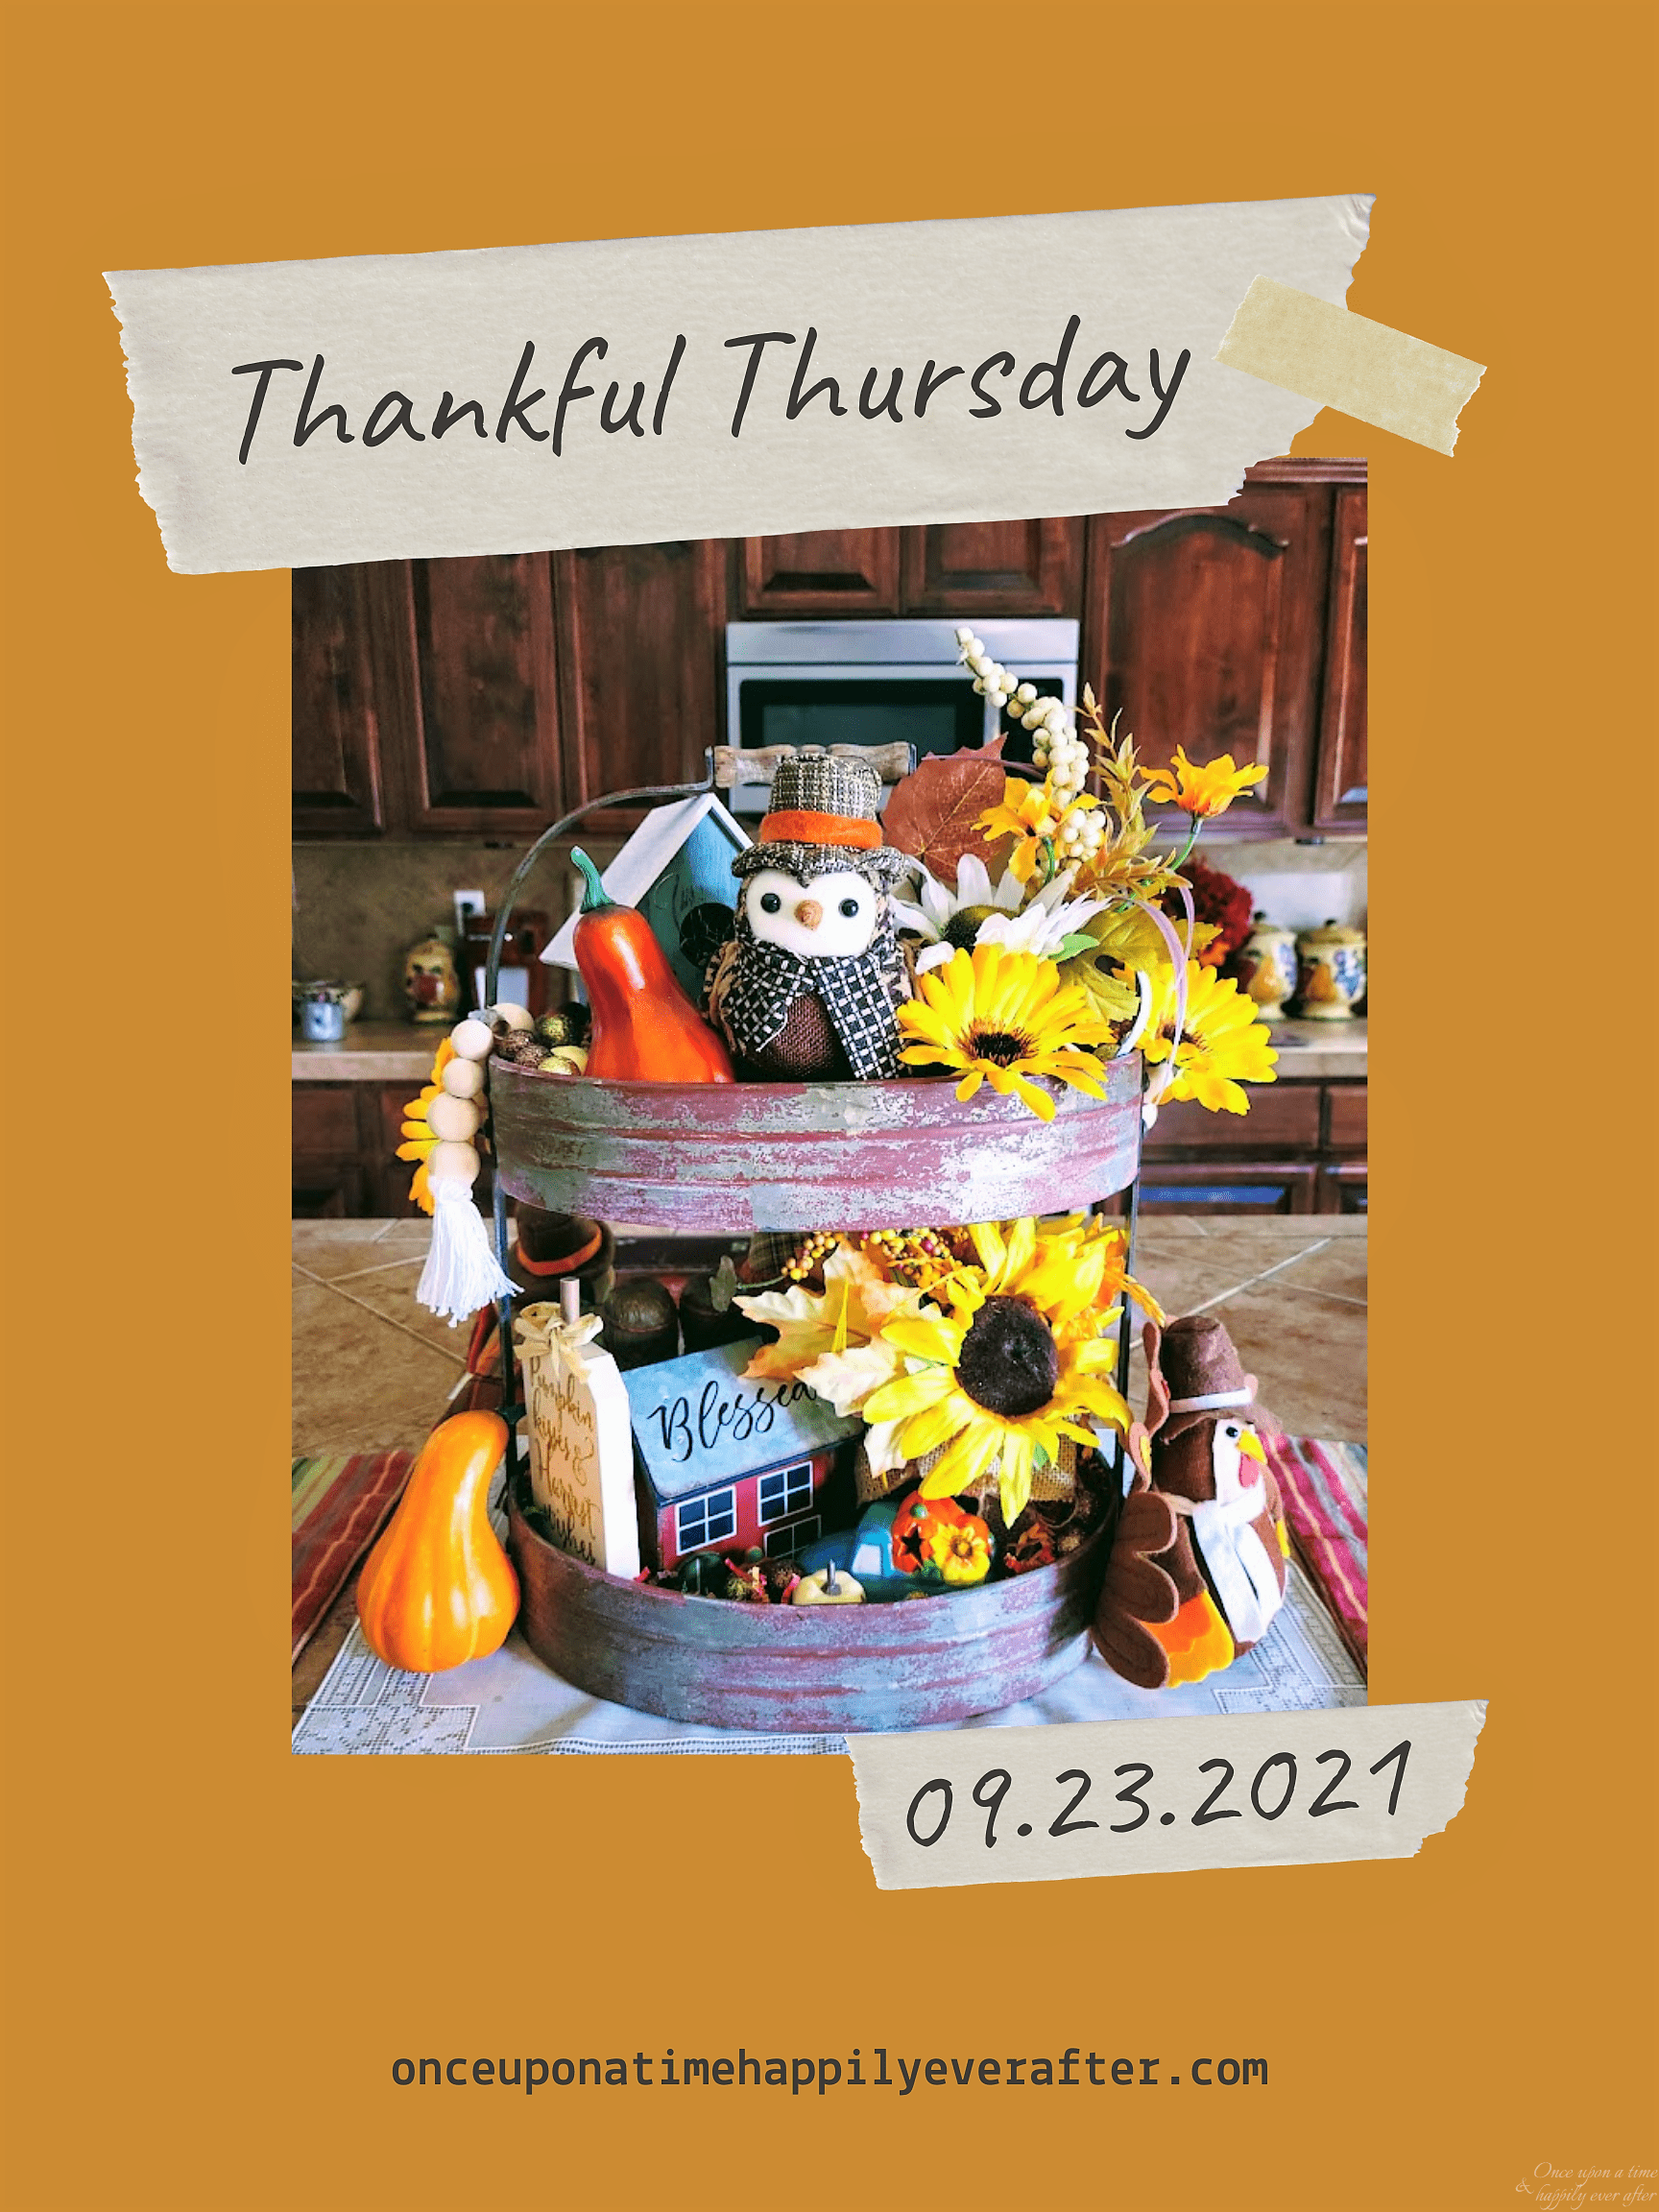 Thankful Thursday 09.23.2021 & More